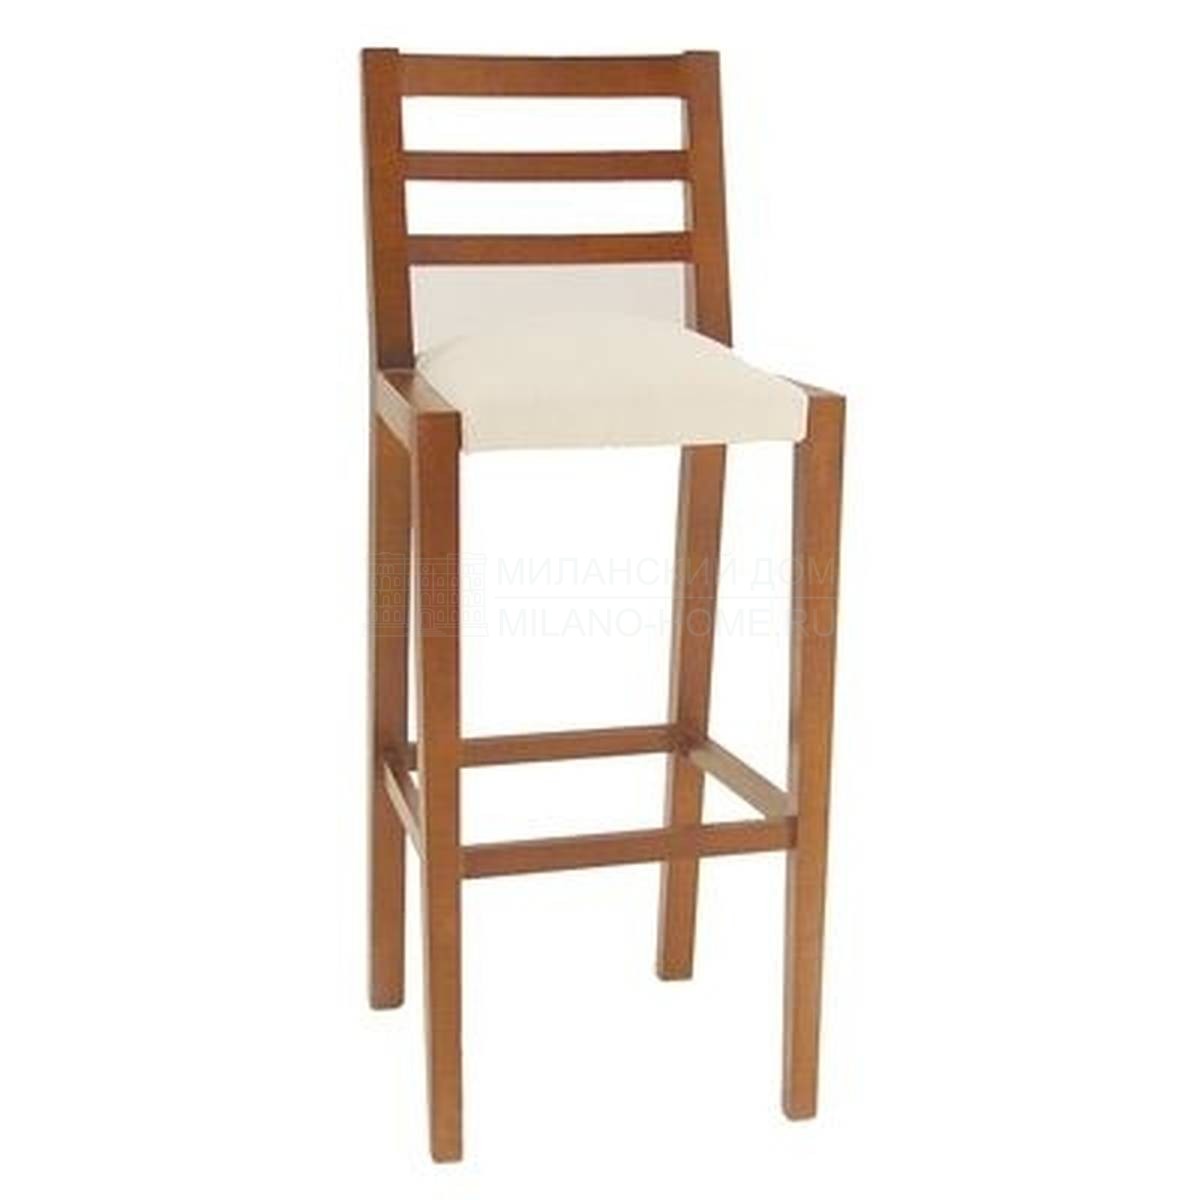 Полубарный стул M-3361 chair из Испании фабрики GUADARTE